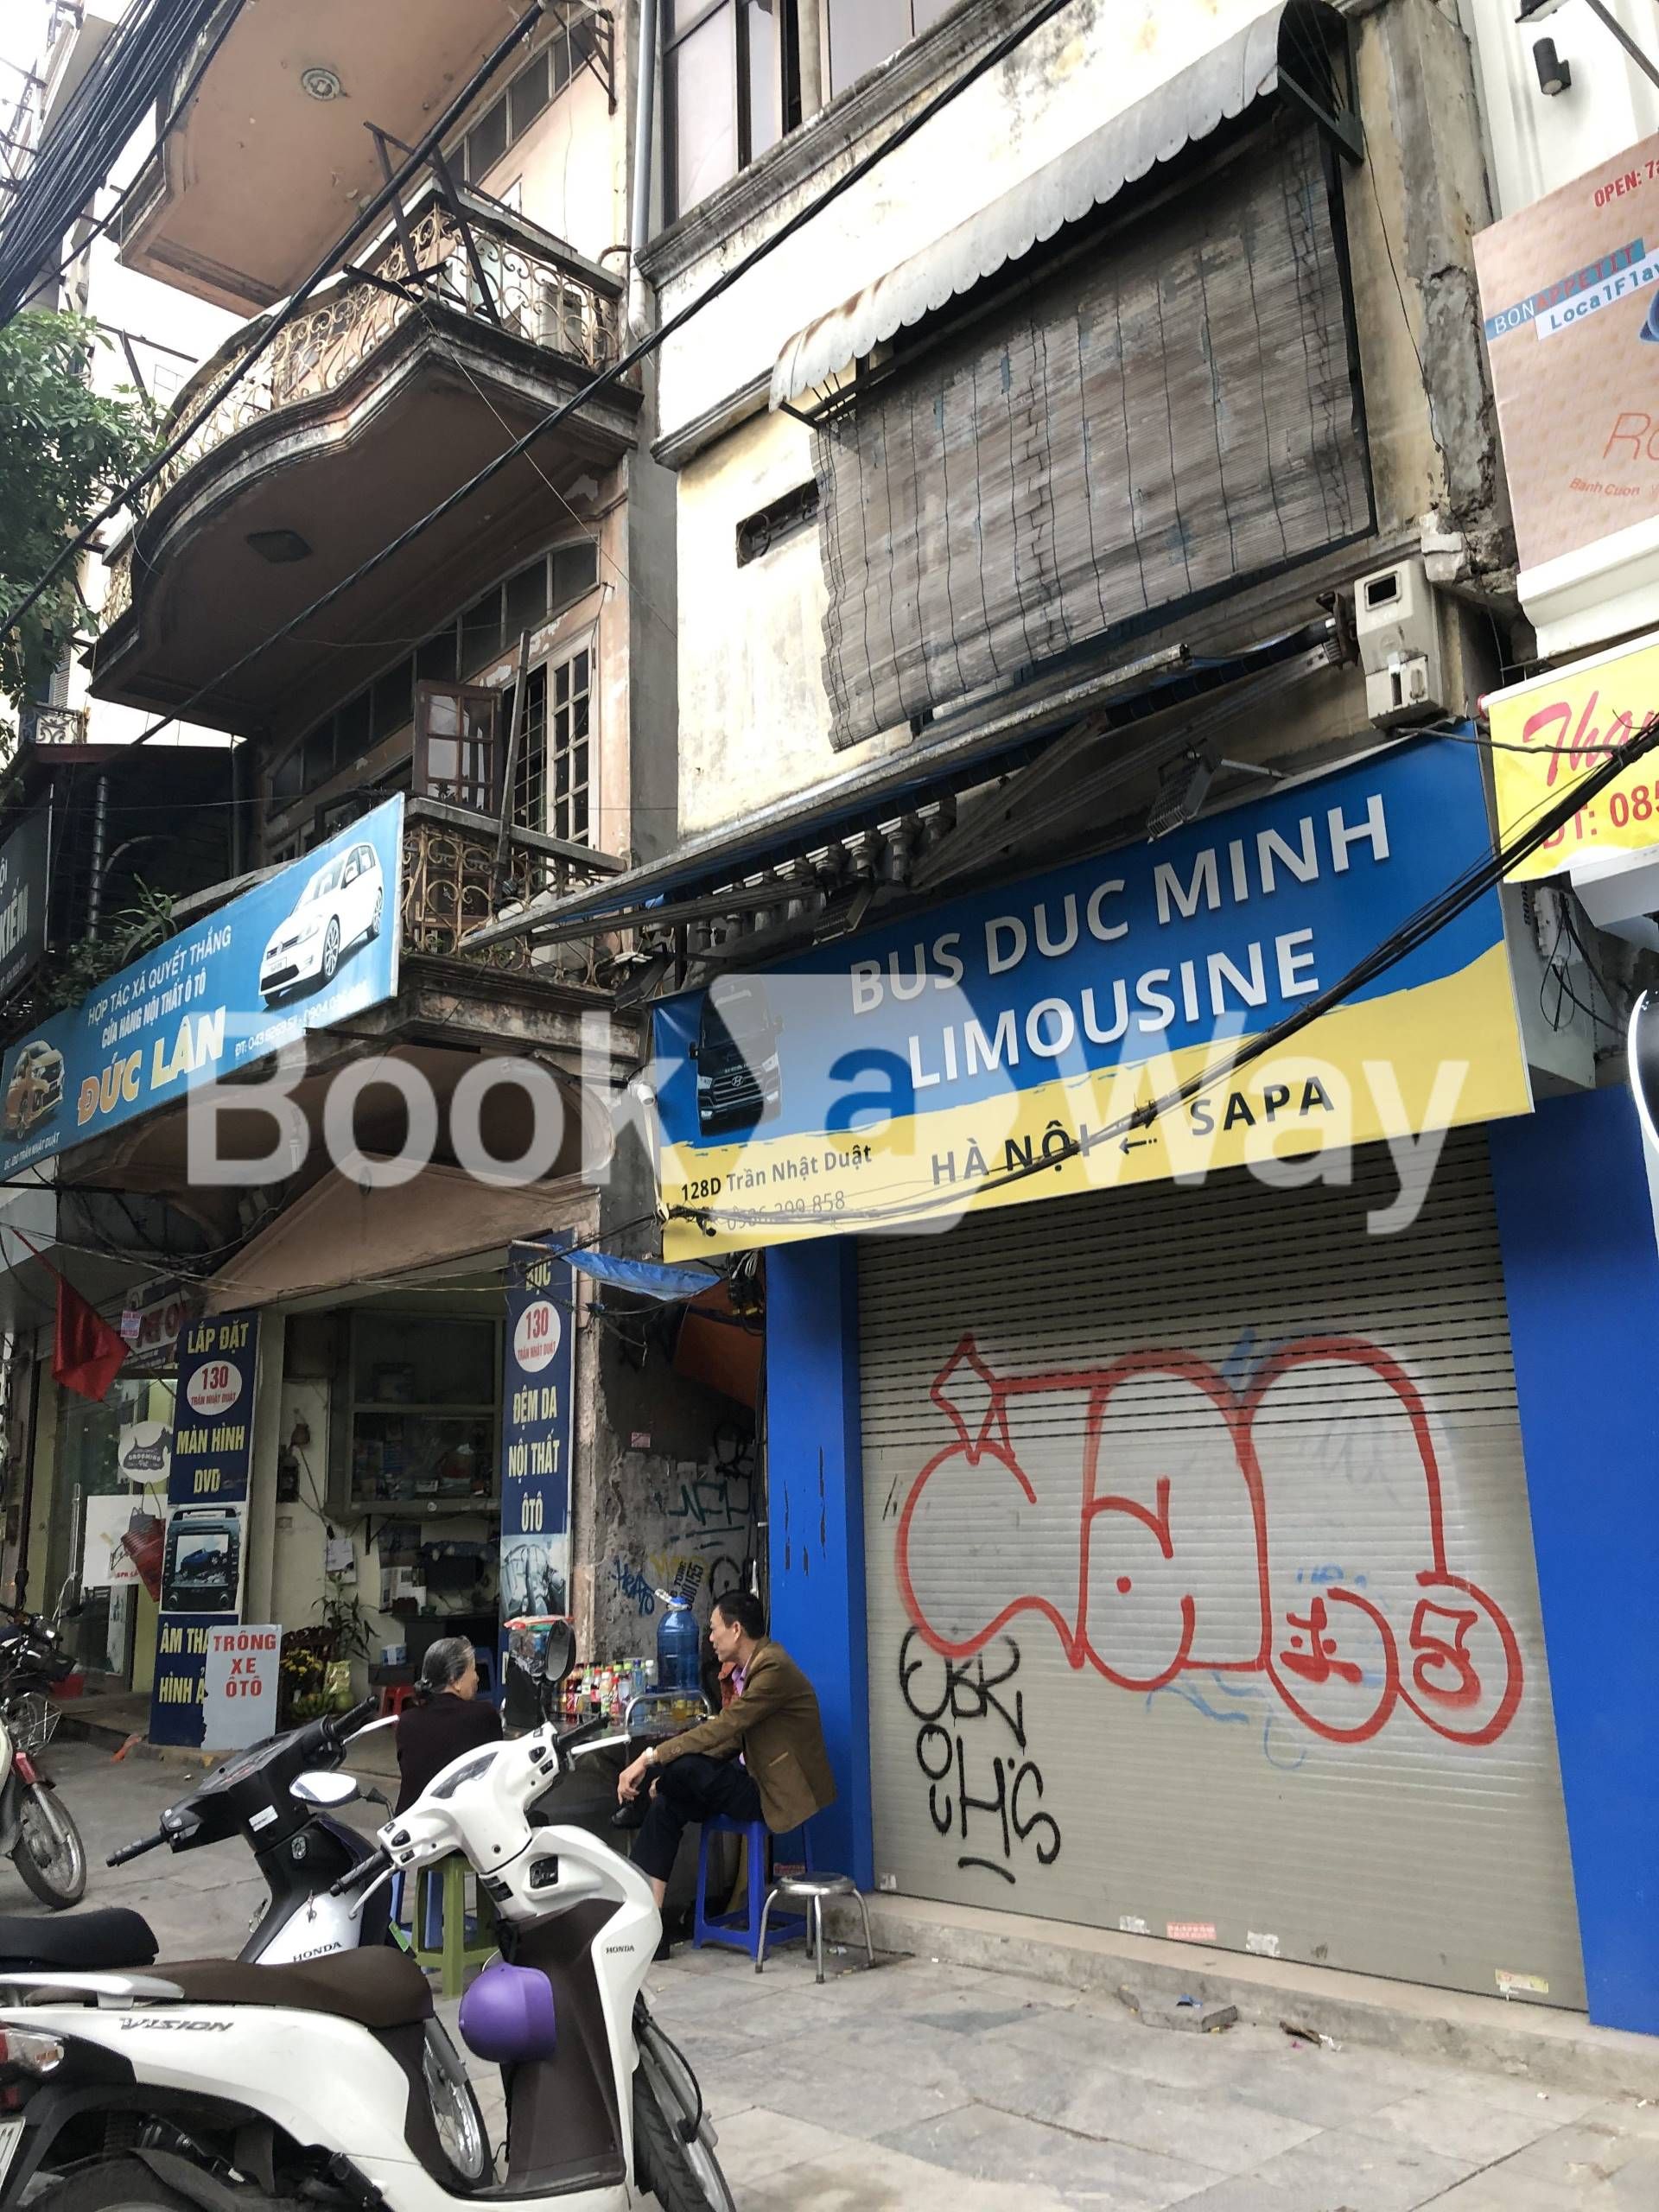 Duc Minh Limousine Hanoi office